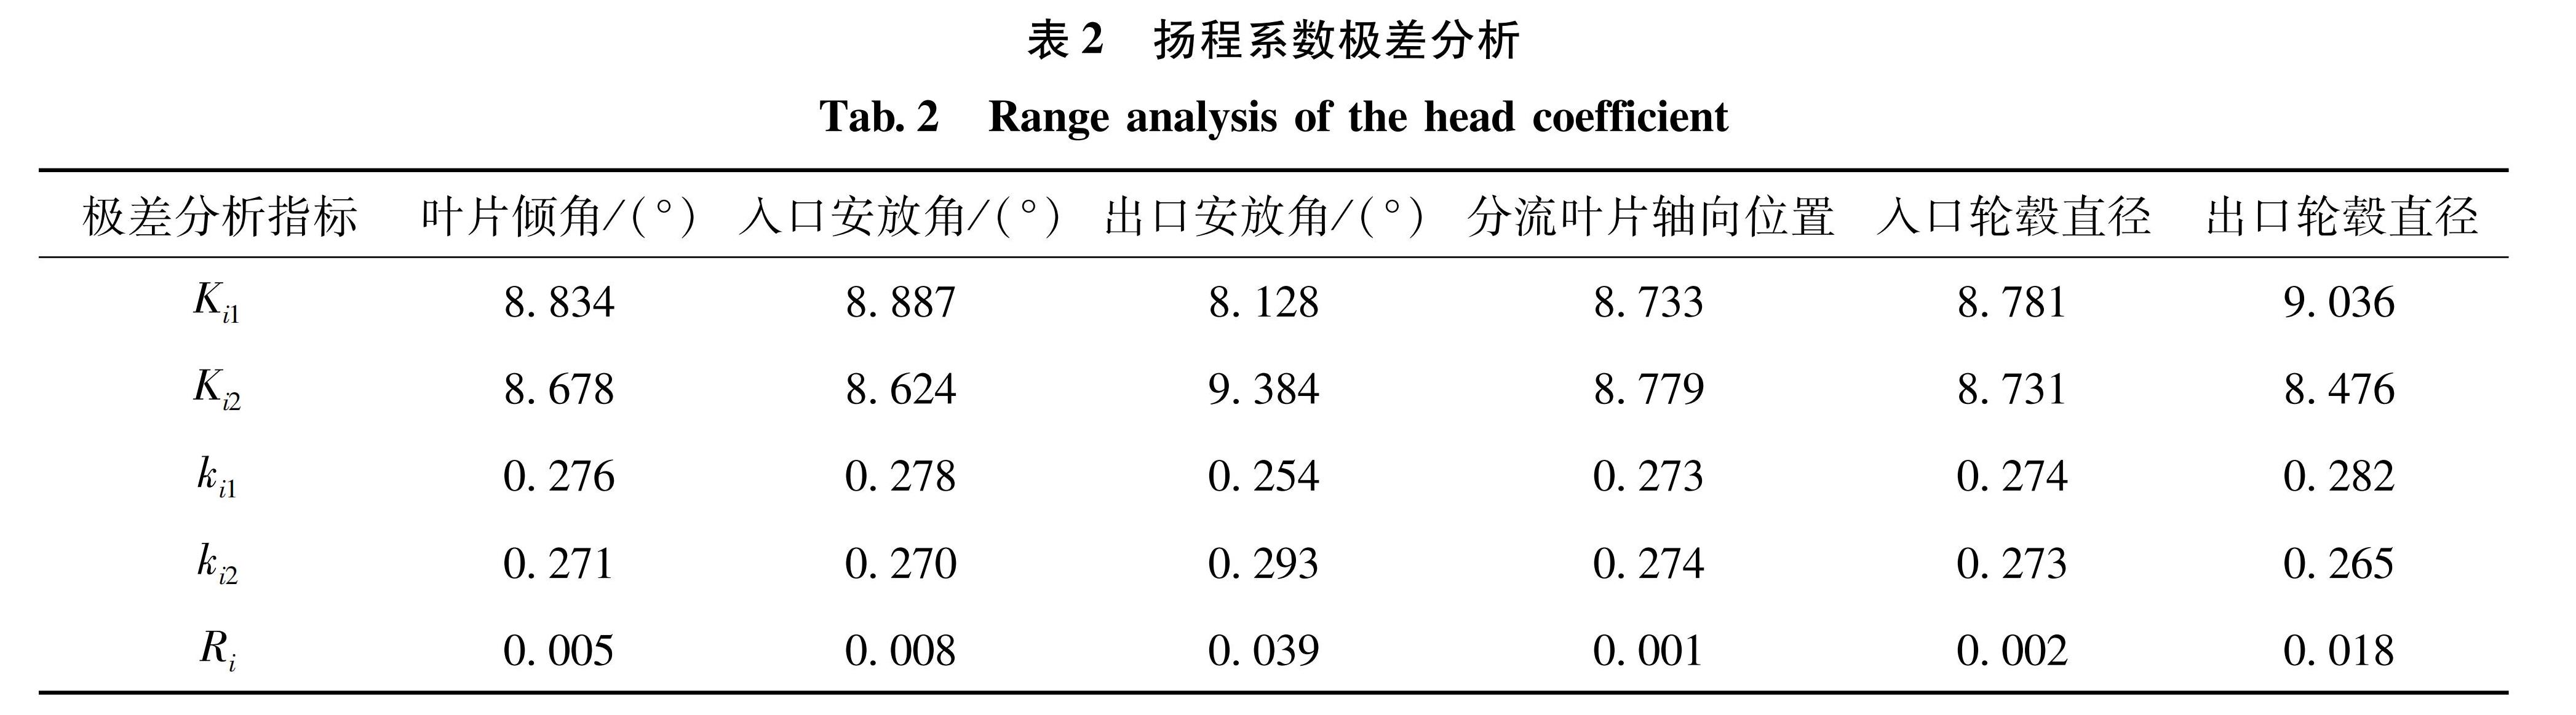 表2 扬程系数极差分析<br/>Tab.2 Range analysis of the head coefficient